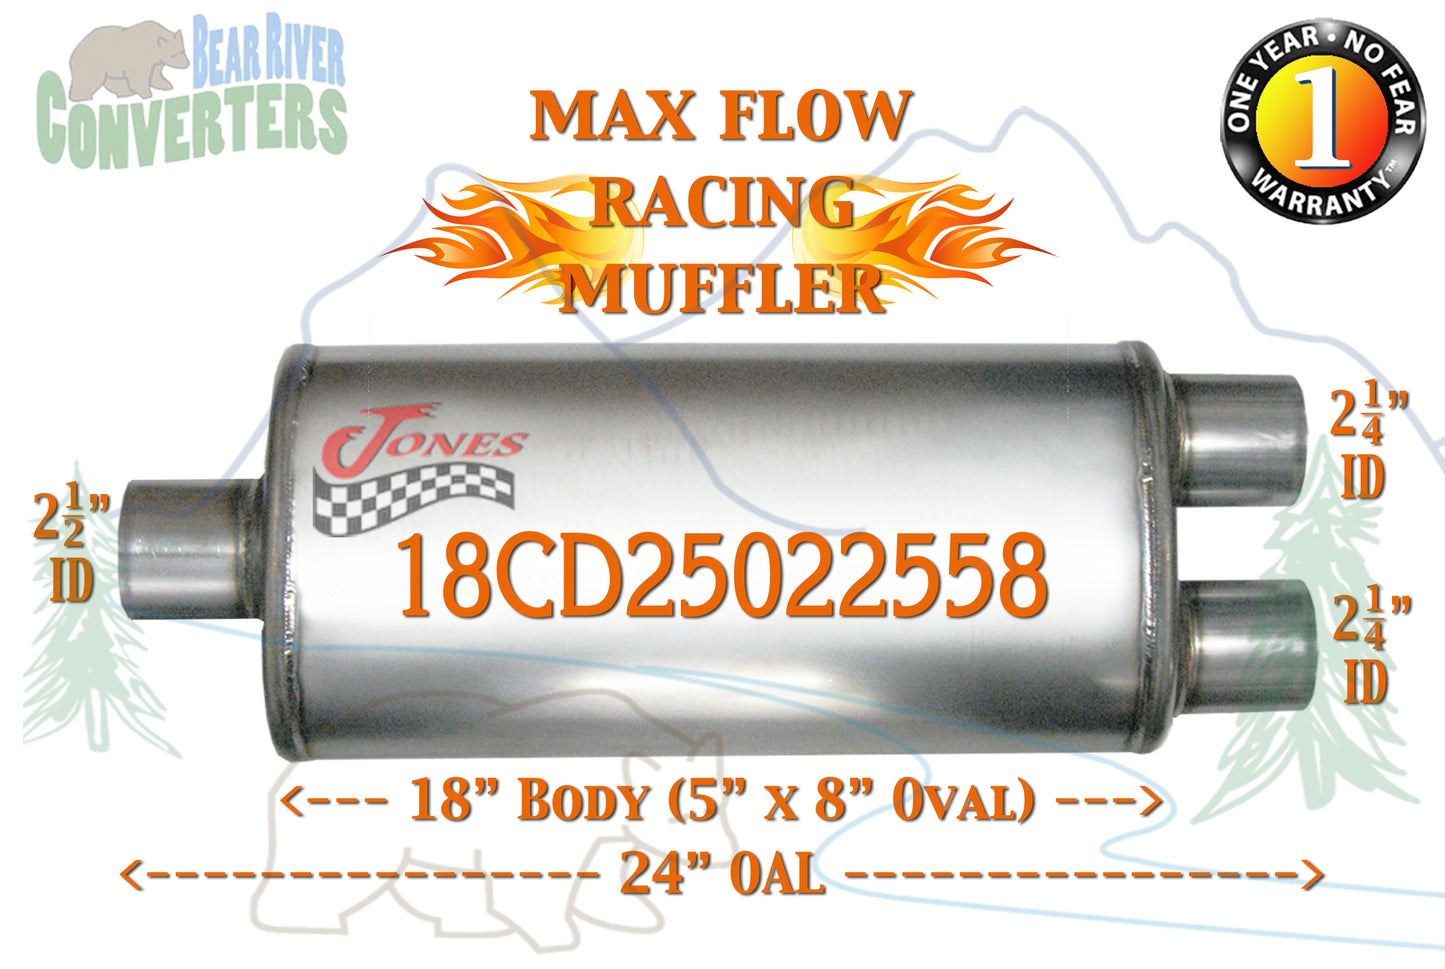 18CD25022558 Jones MF2251 Max Flow Racing Muffler 18” Oval Body 2 1/2" Center/ 2 1/4" Dual 24" OAL